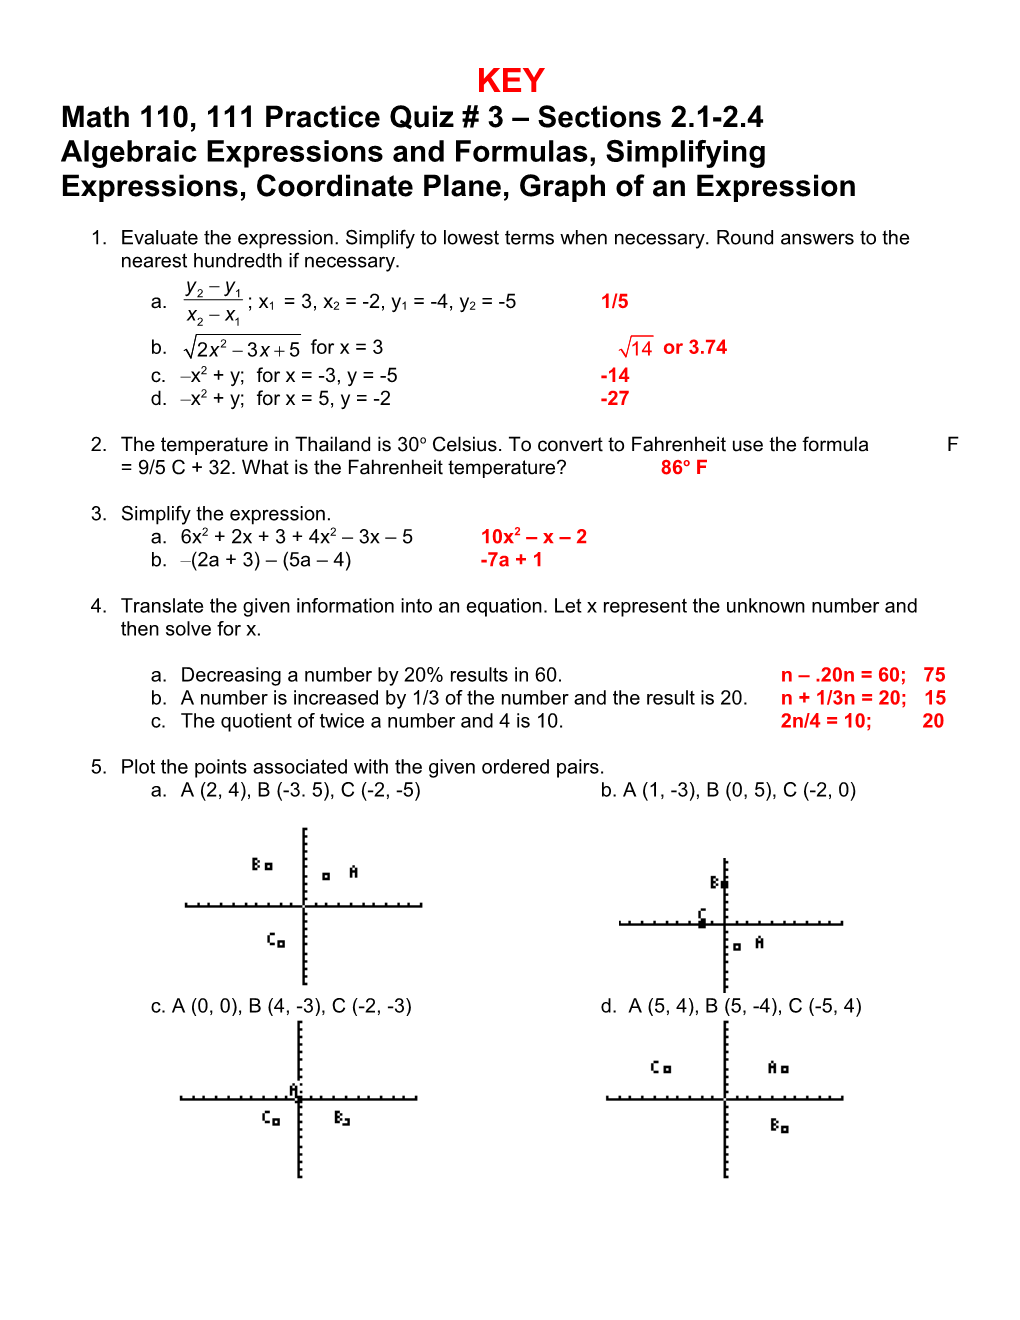 Math 110, 111 Practice Quiz # 5 Sections 3 s1